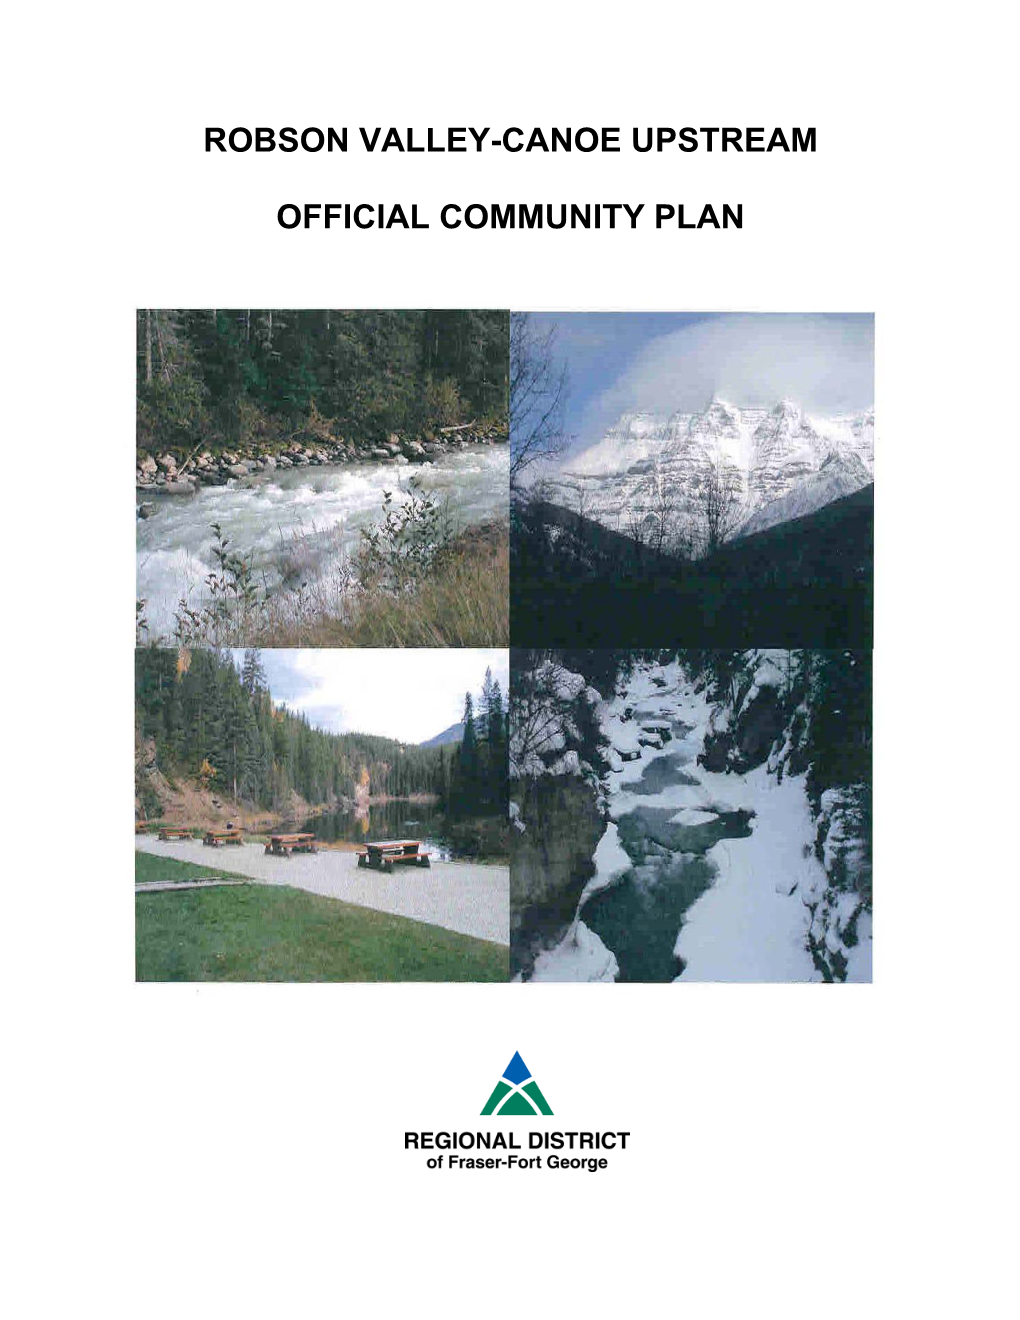 Robson Valley-Canoe Upstream Official Community Plan